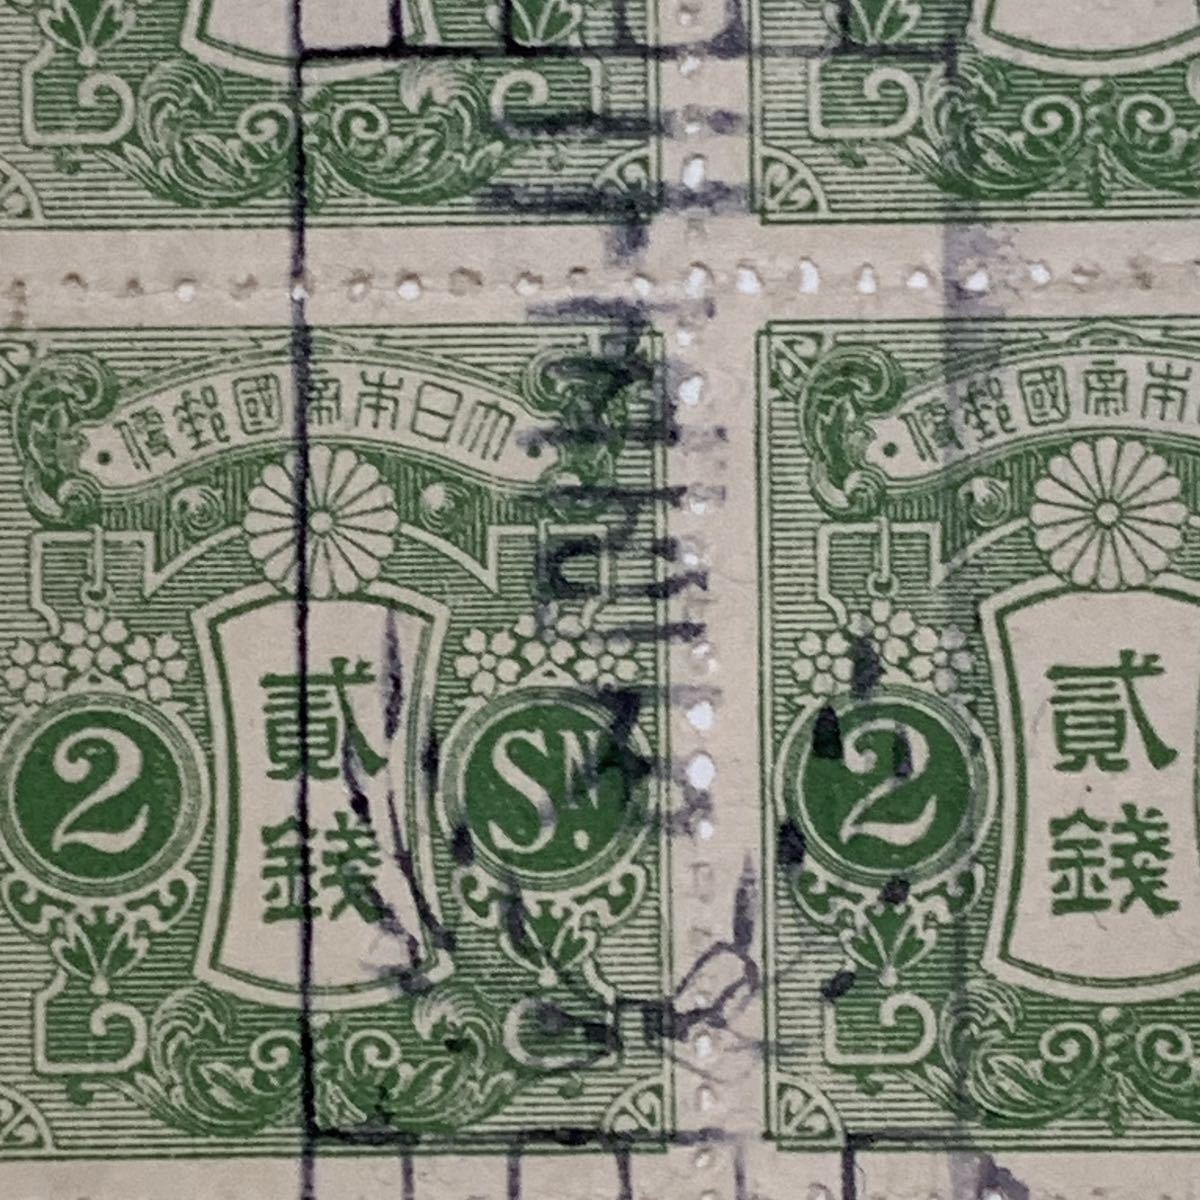 №H 日本 昭和 切手 香港加刷 銭 枚ブロック. 終戦日 印付